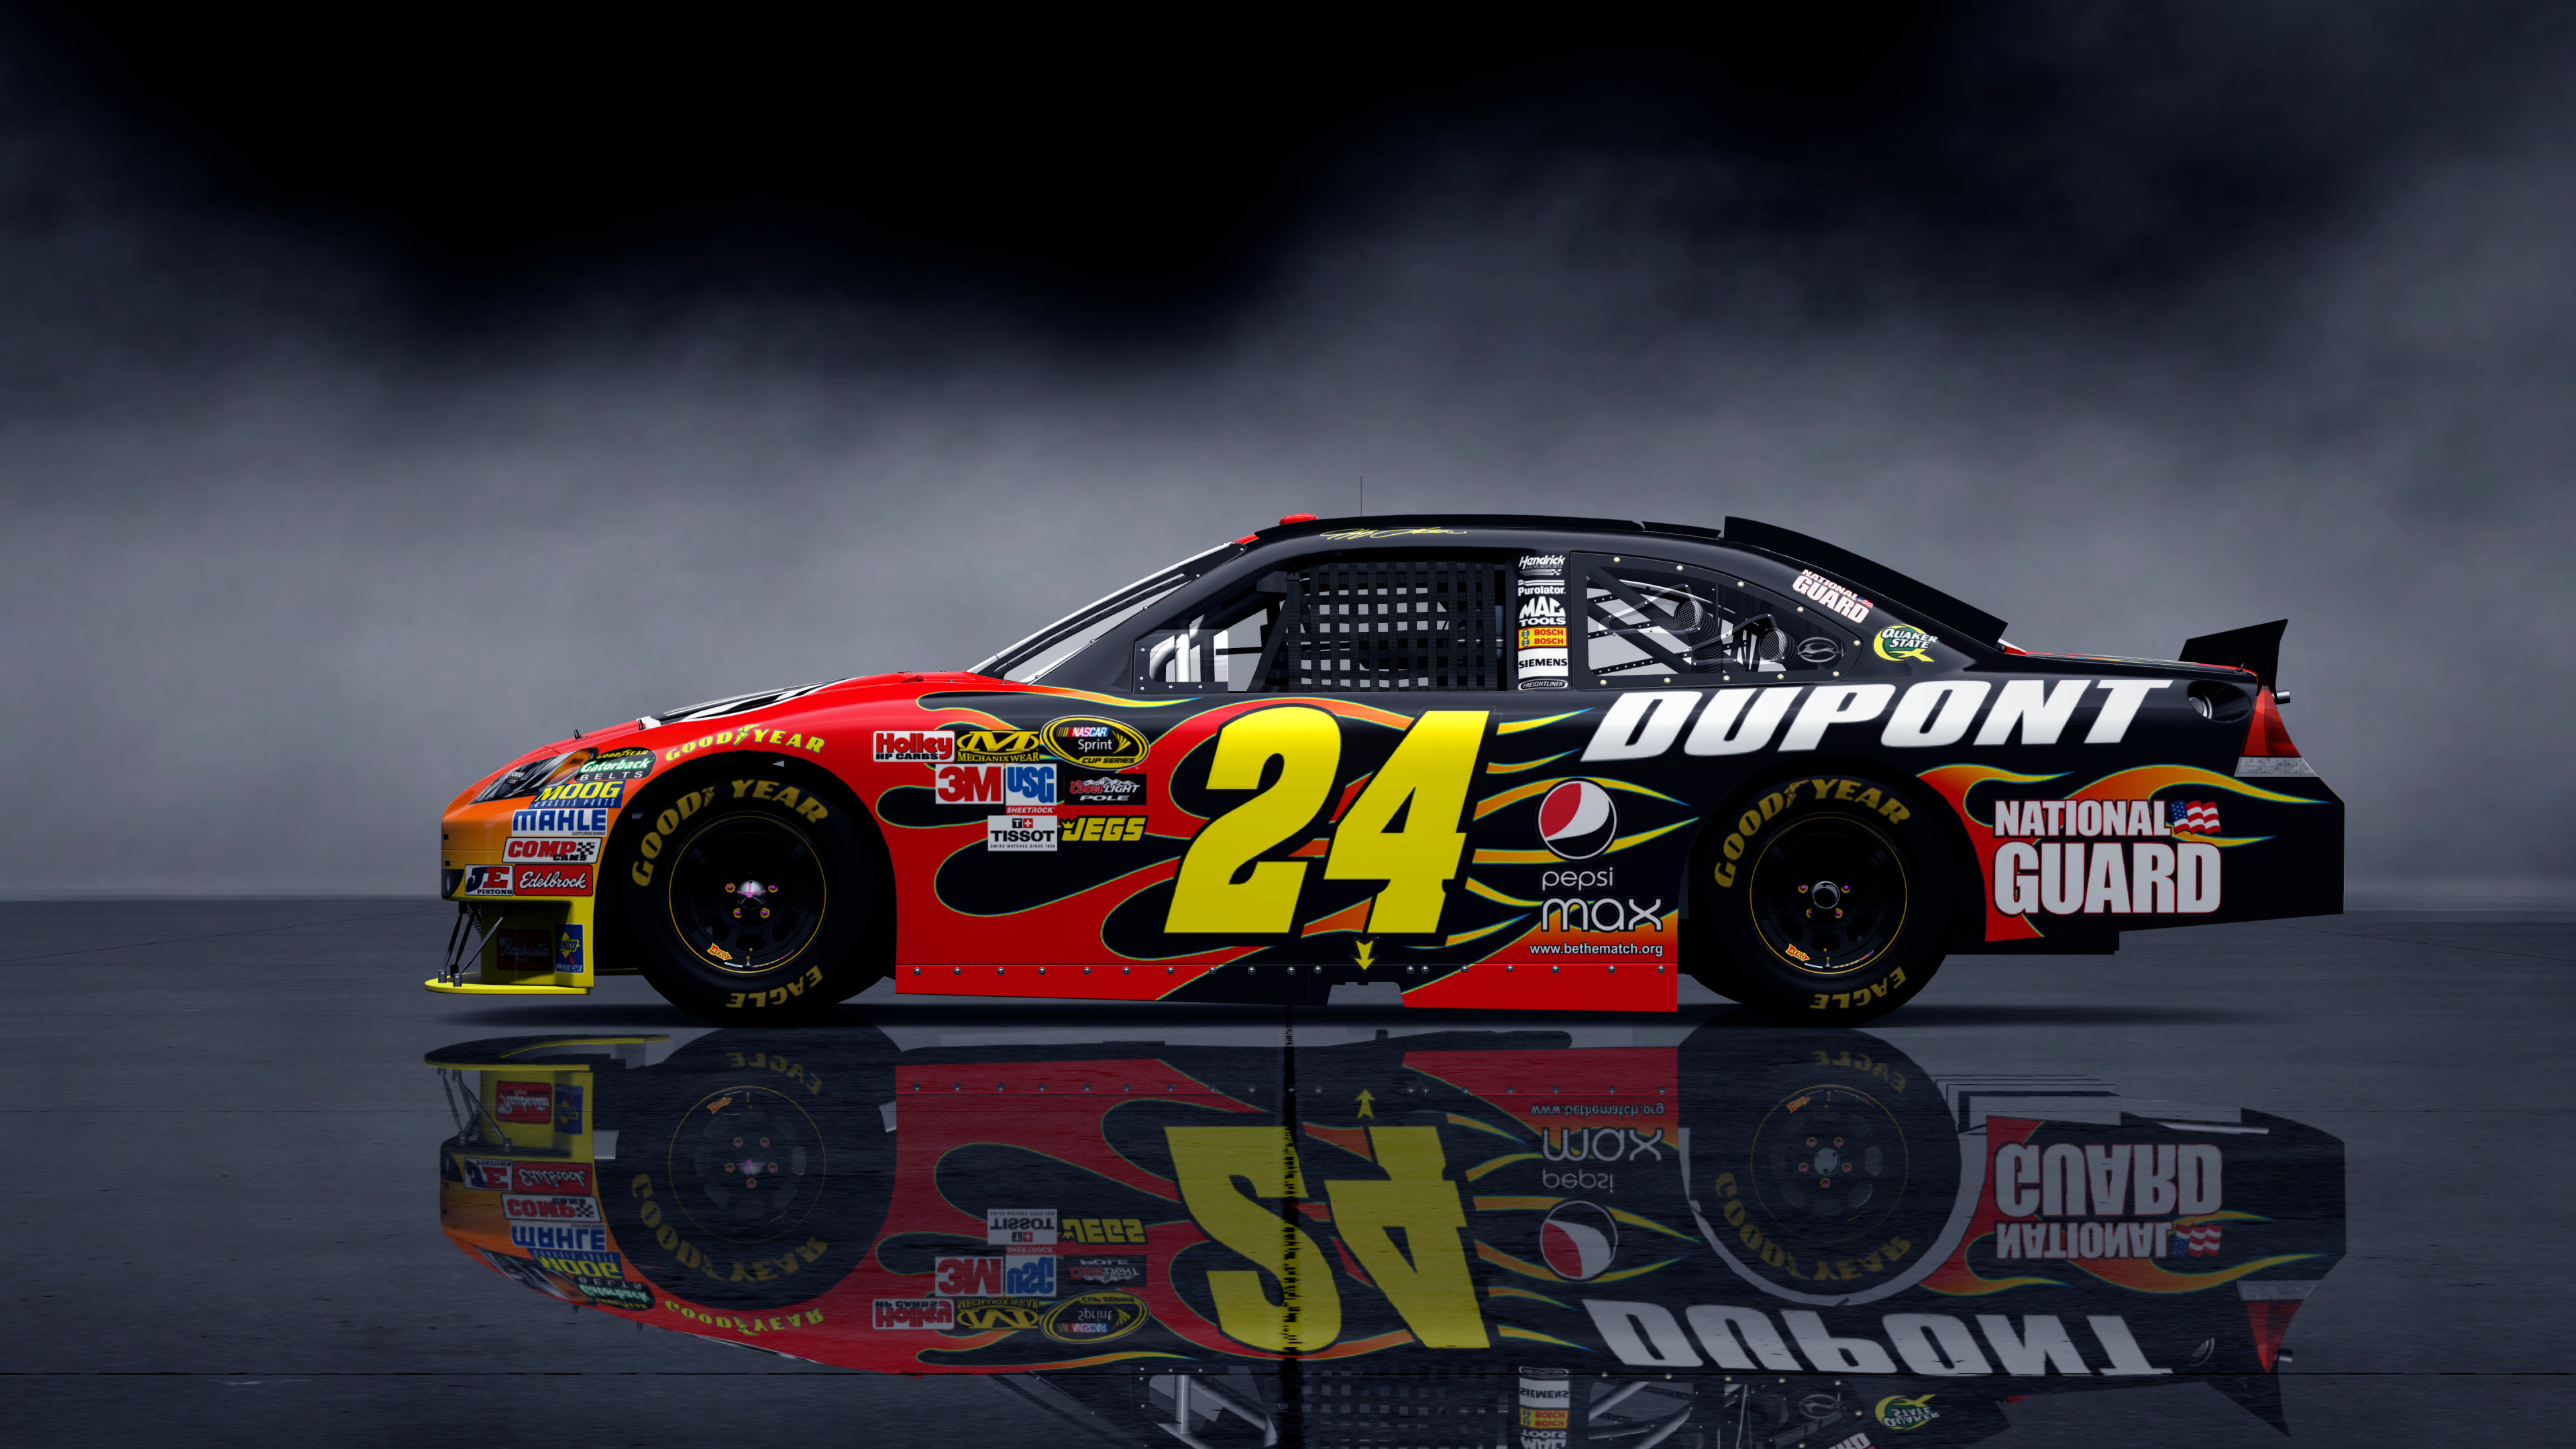 Jeff Gordon NASCAR wallpaper, Desktop background, Motorsport enthusiast, HD quality, 3840x2160 4K Desktop